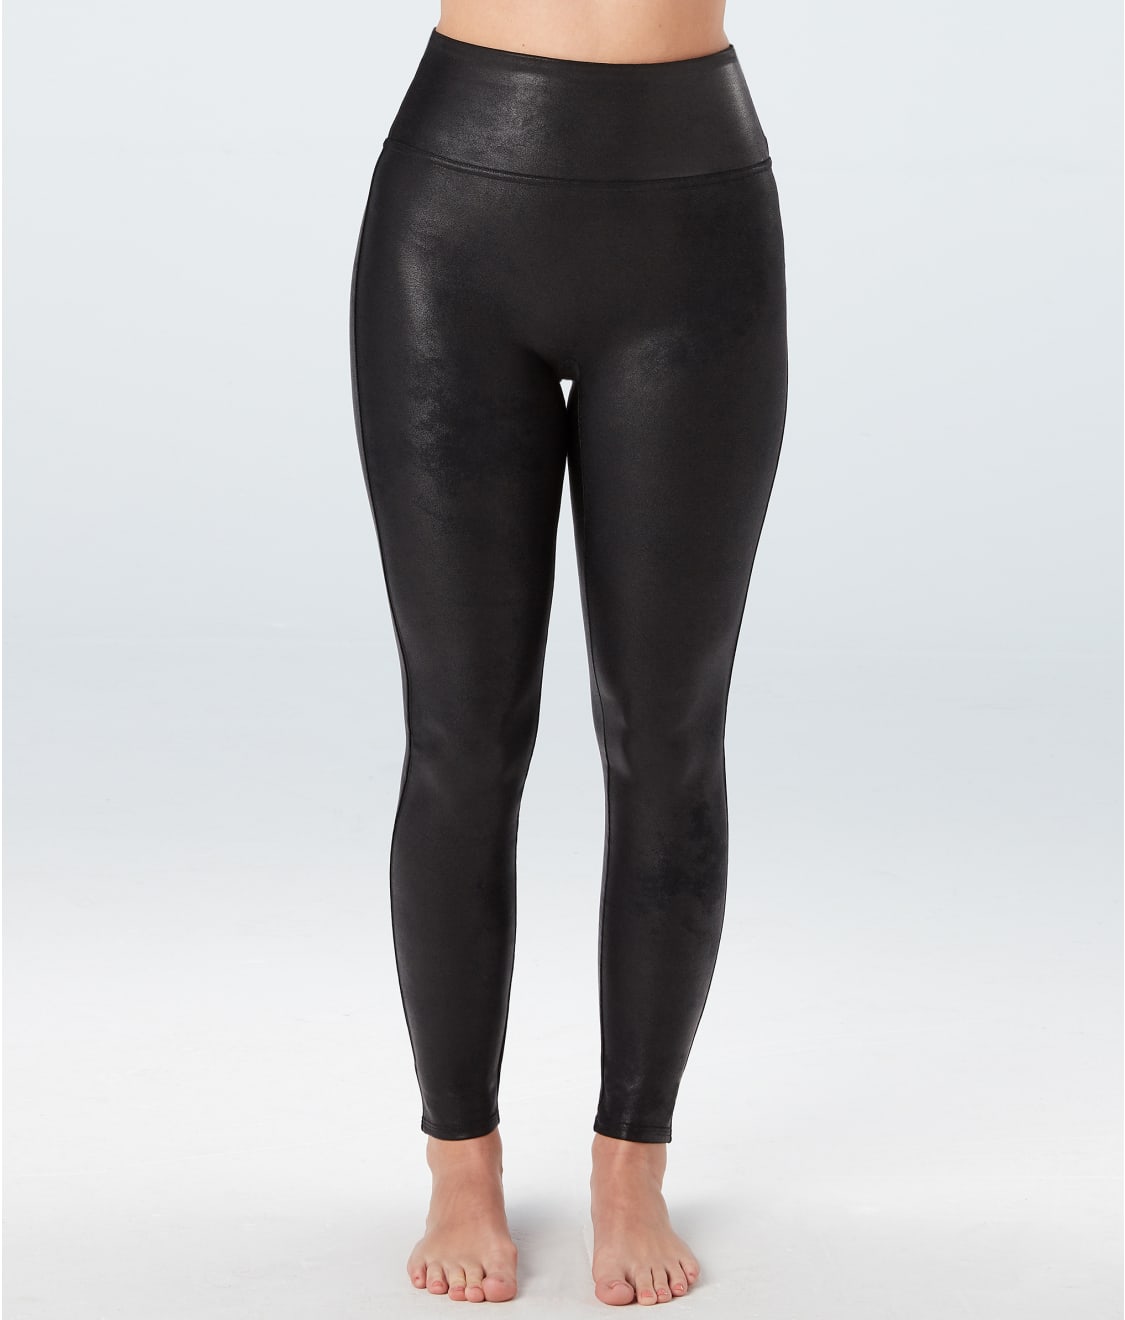 Top more than 109 spanx plus size leggings latest - kenmei.edu.vn